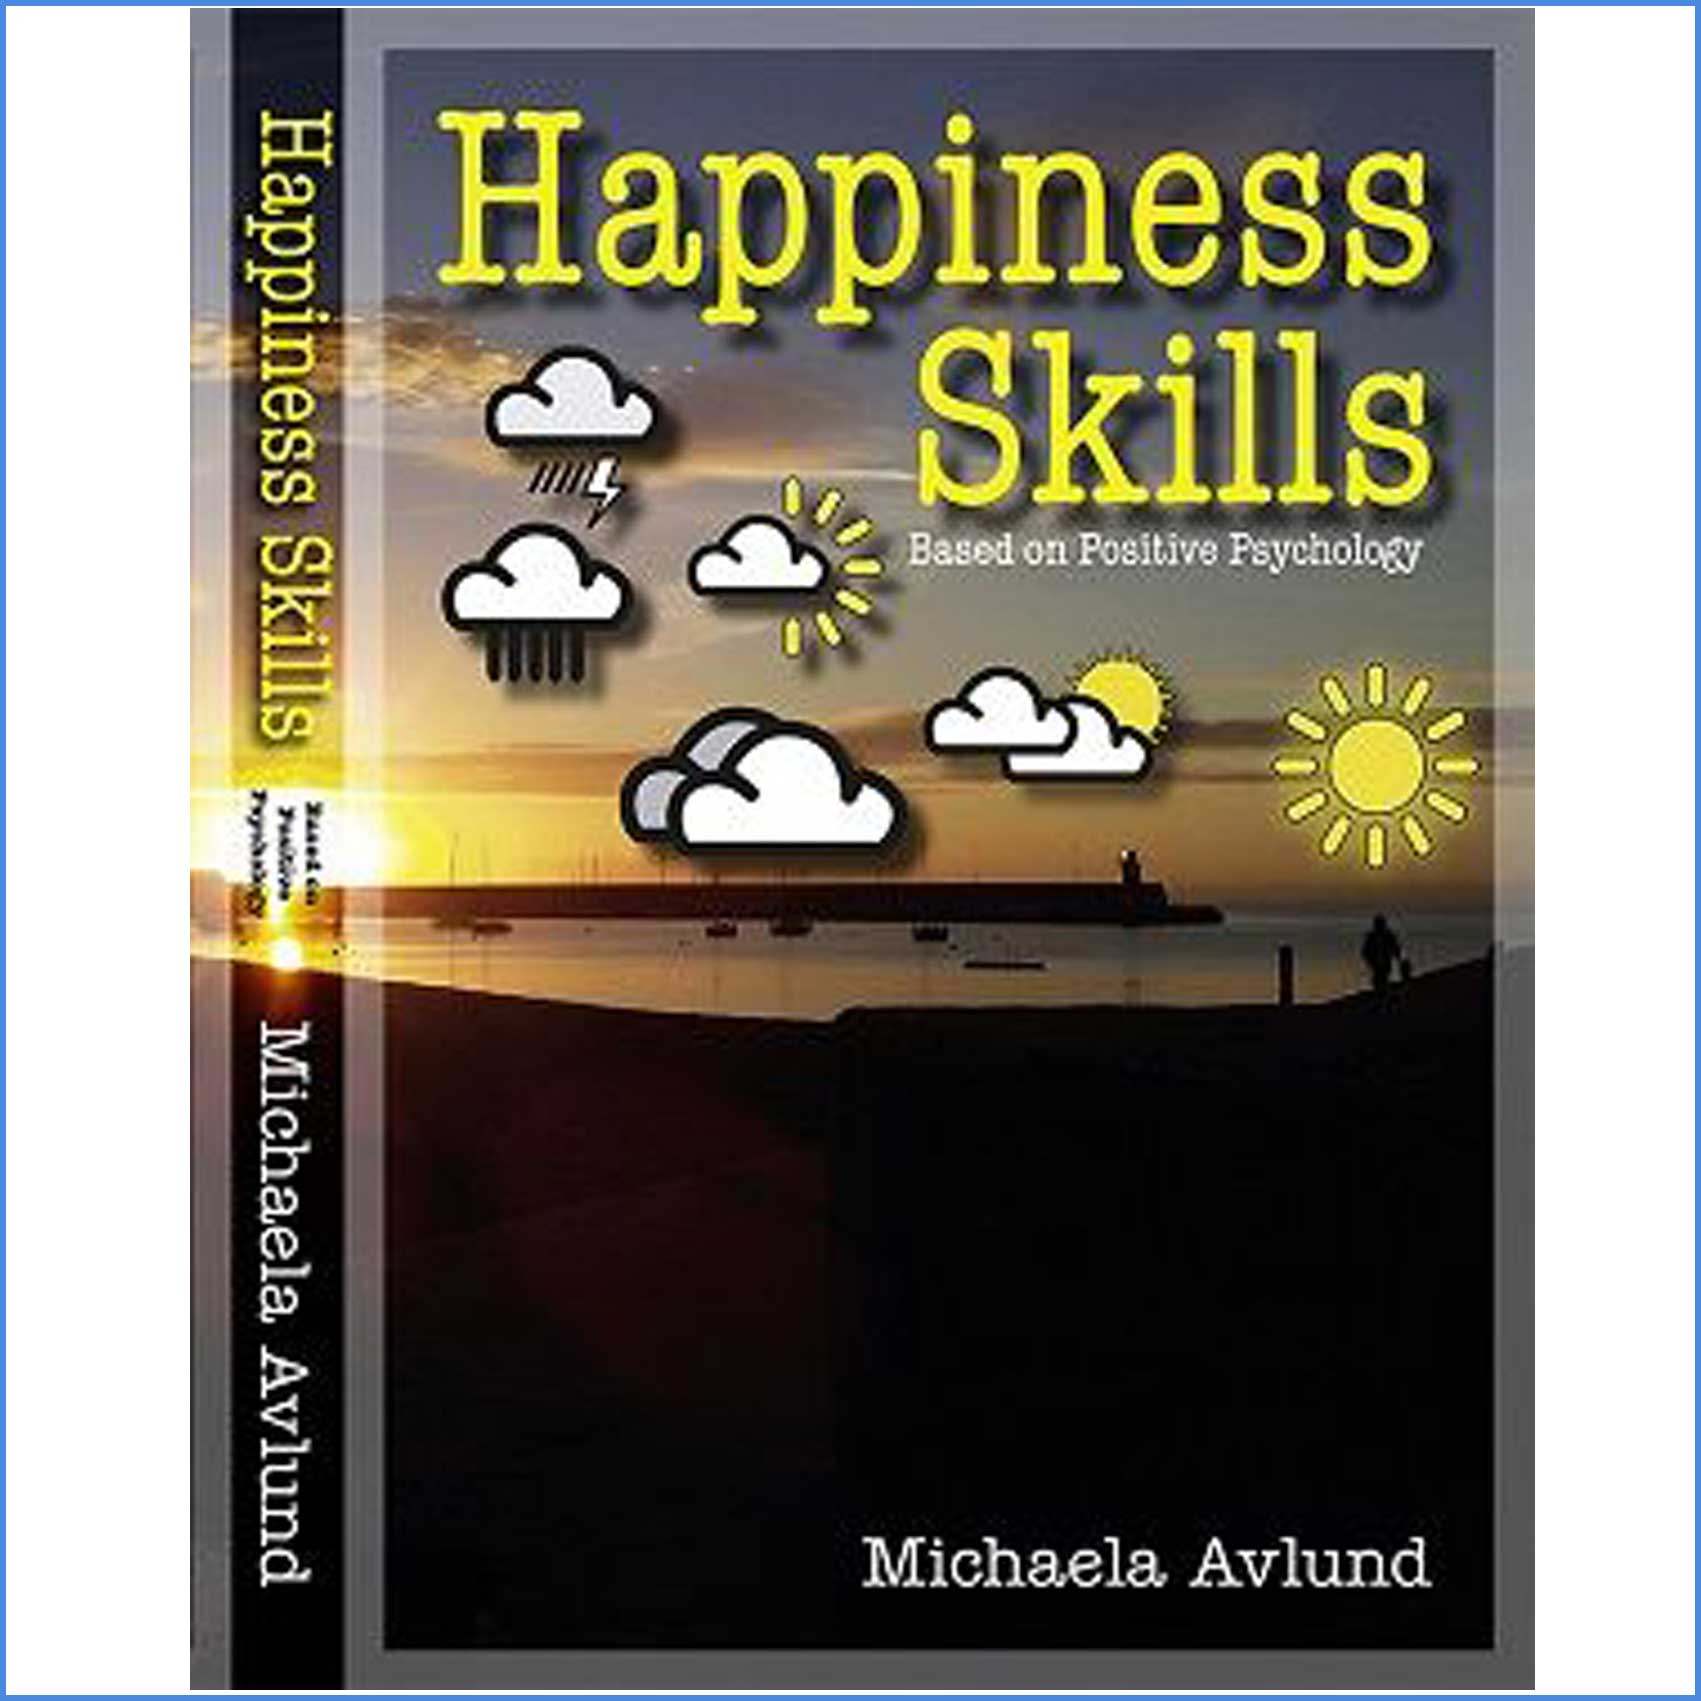 Happiness Skills based on Positive Psychology by Michaela Avlund